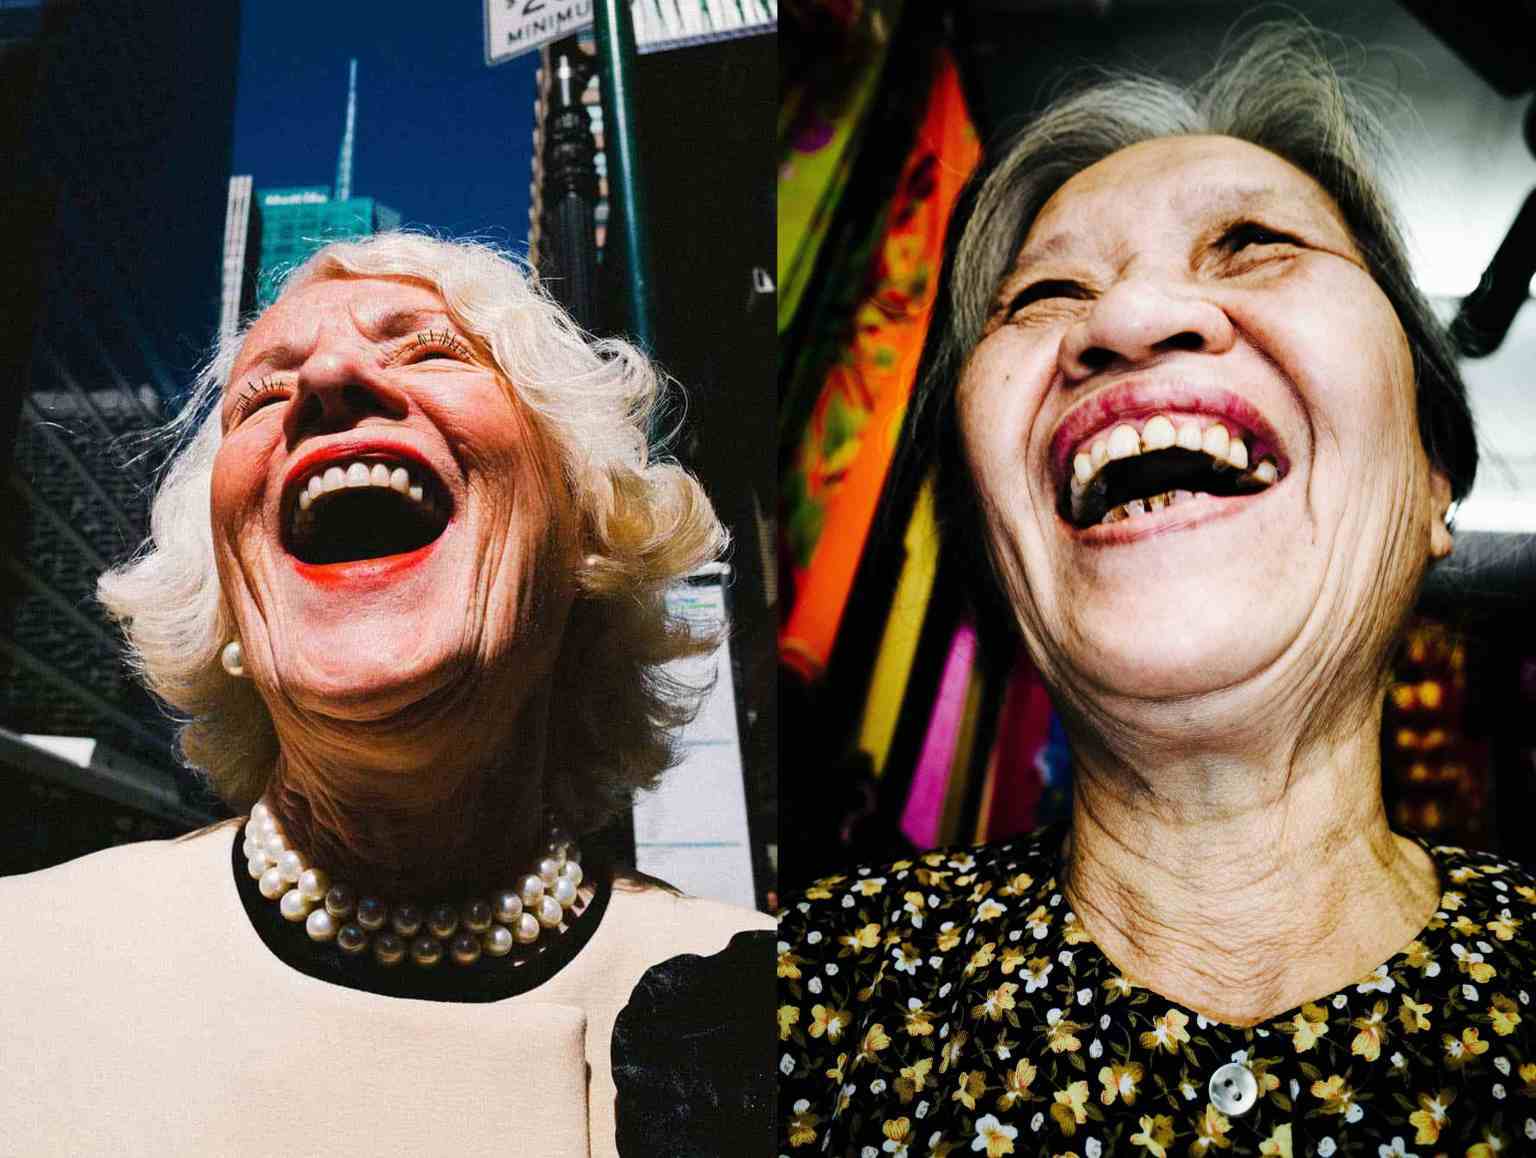 Eric kim street photography laughing ladies NYC hanoi